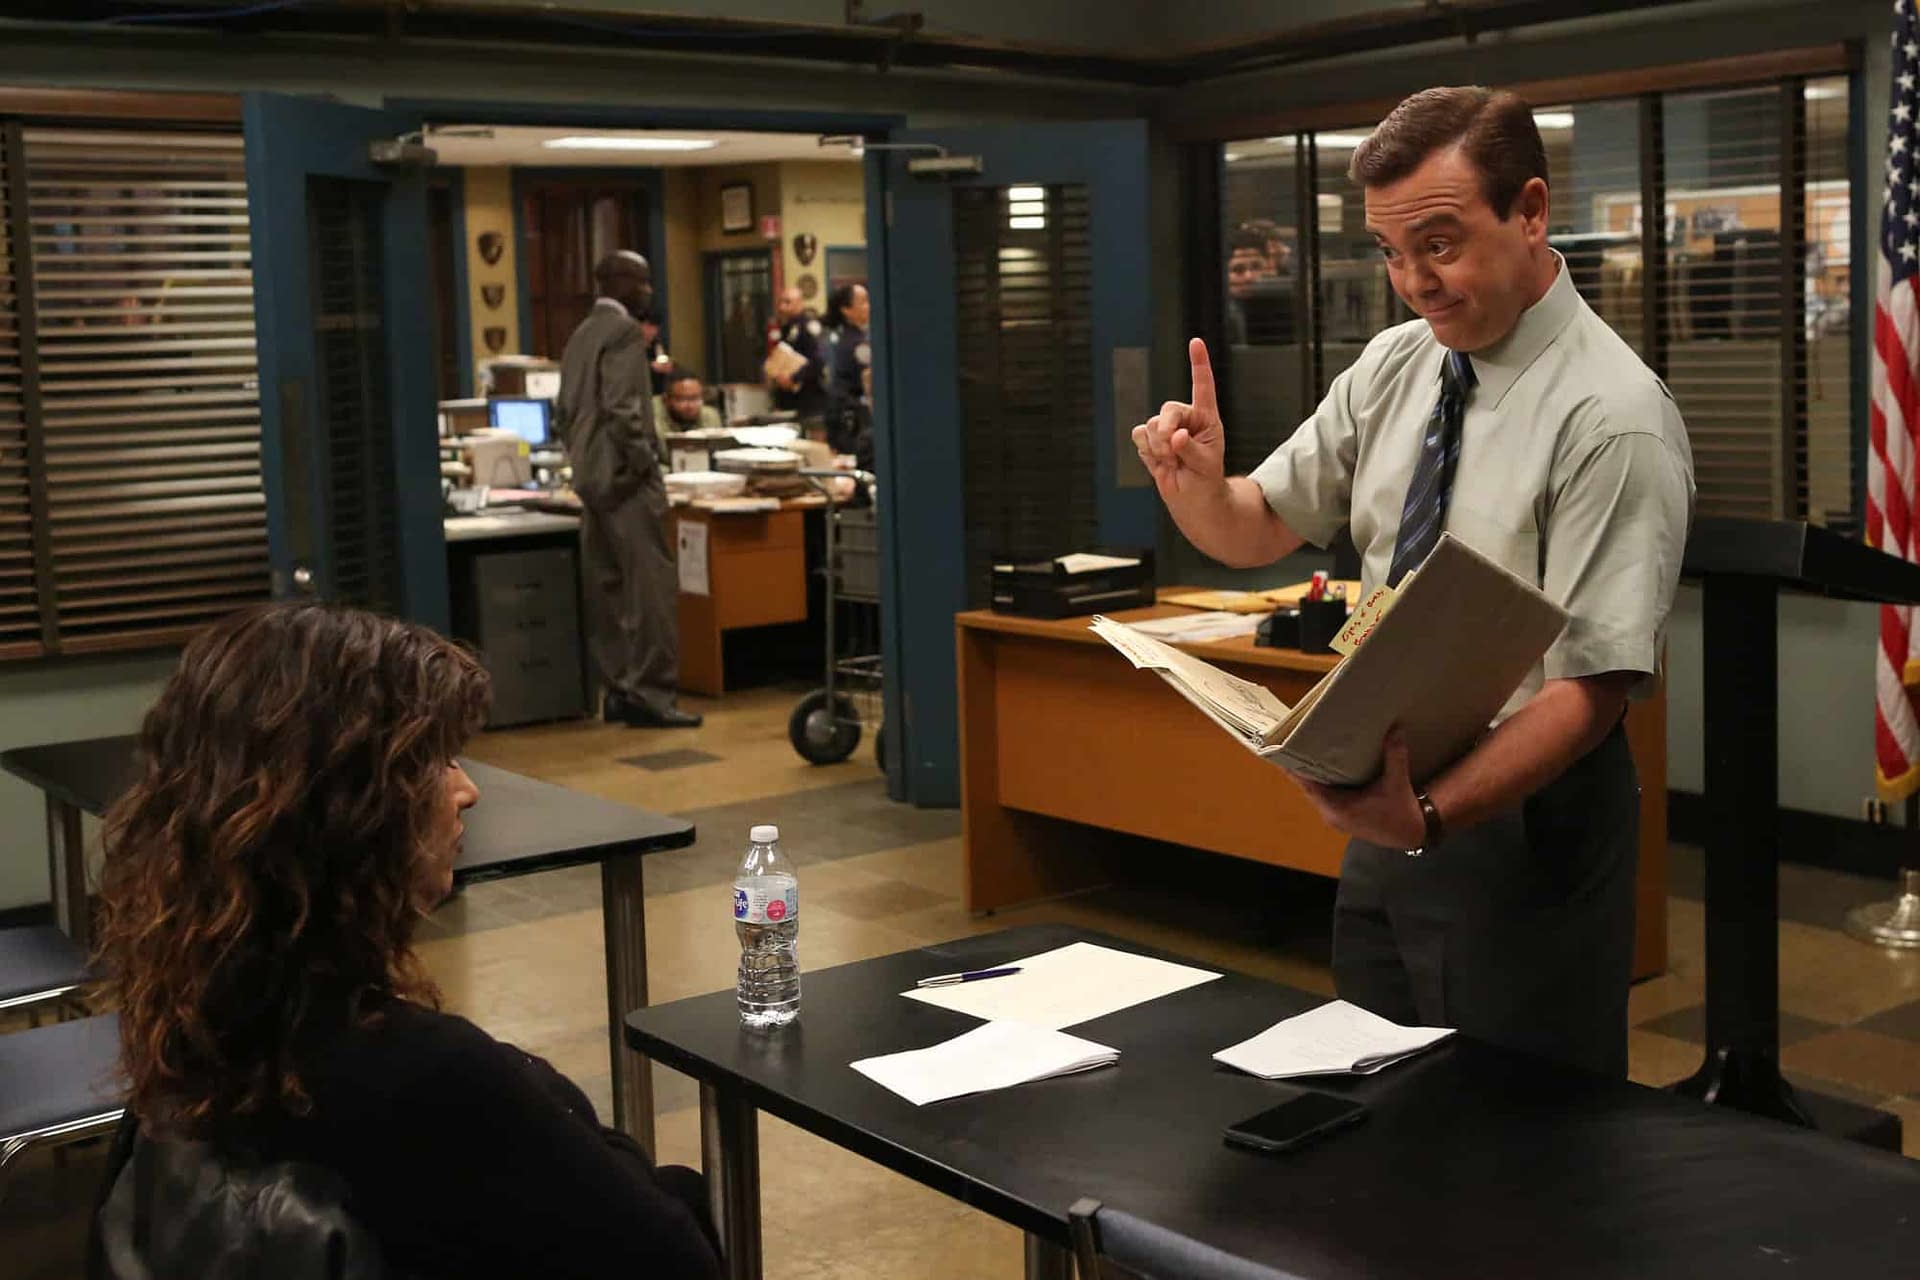 Brooklyn Nine-Nine Season 6 Episode 3: Summary, Images, and a High School Reunion